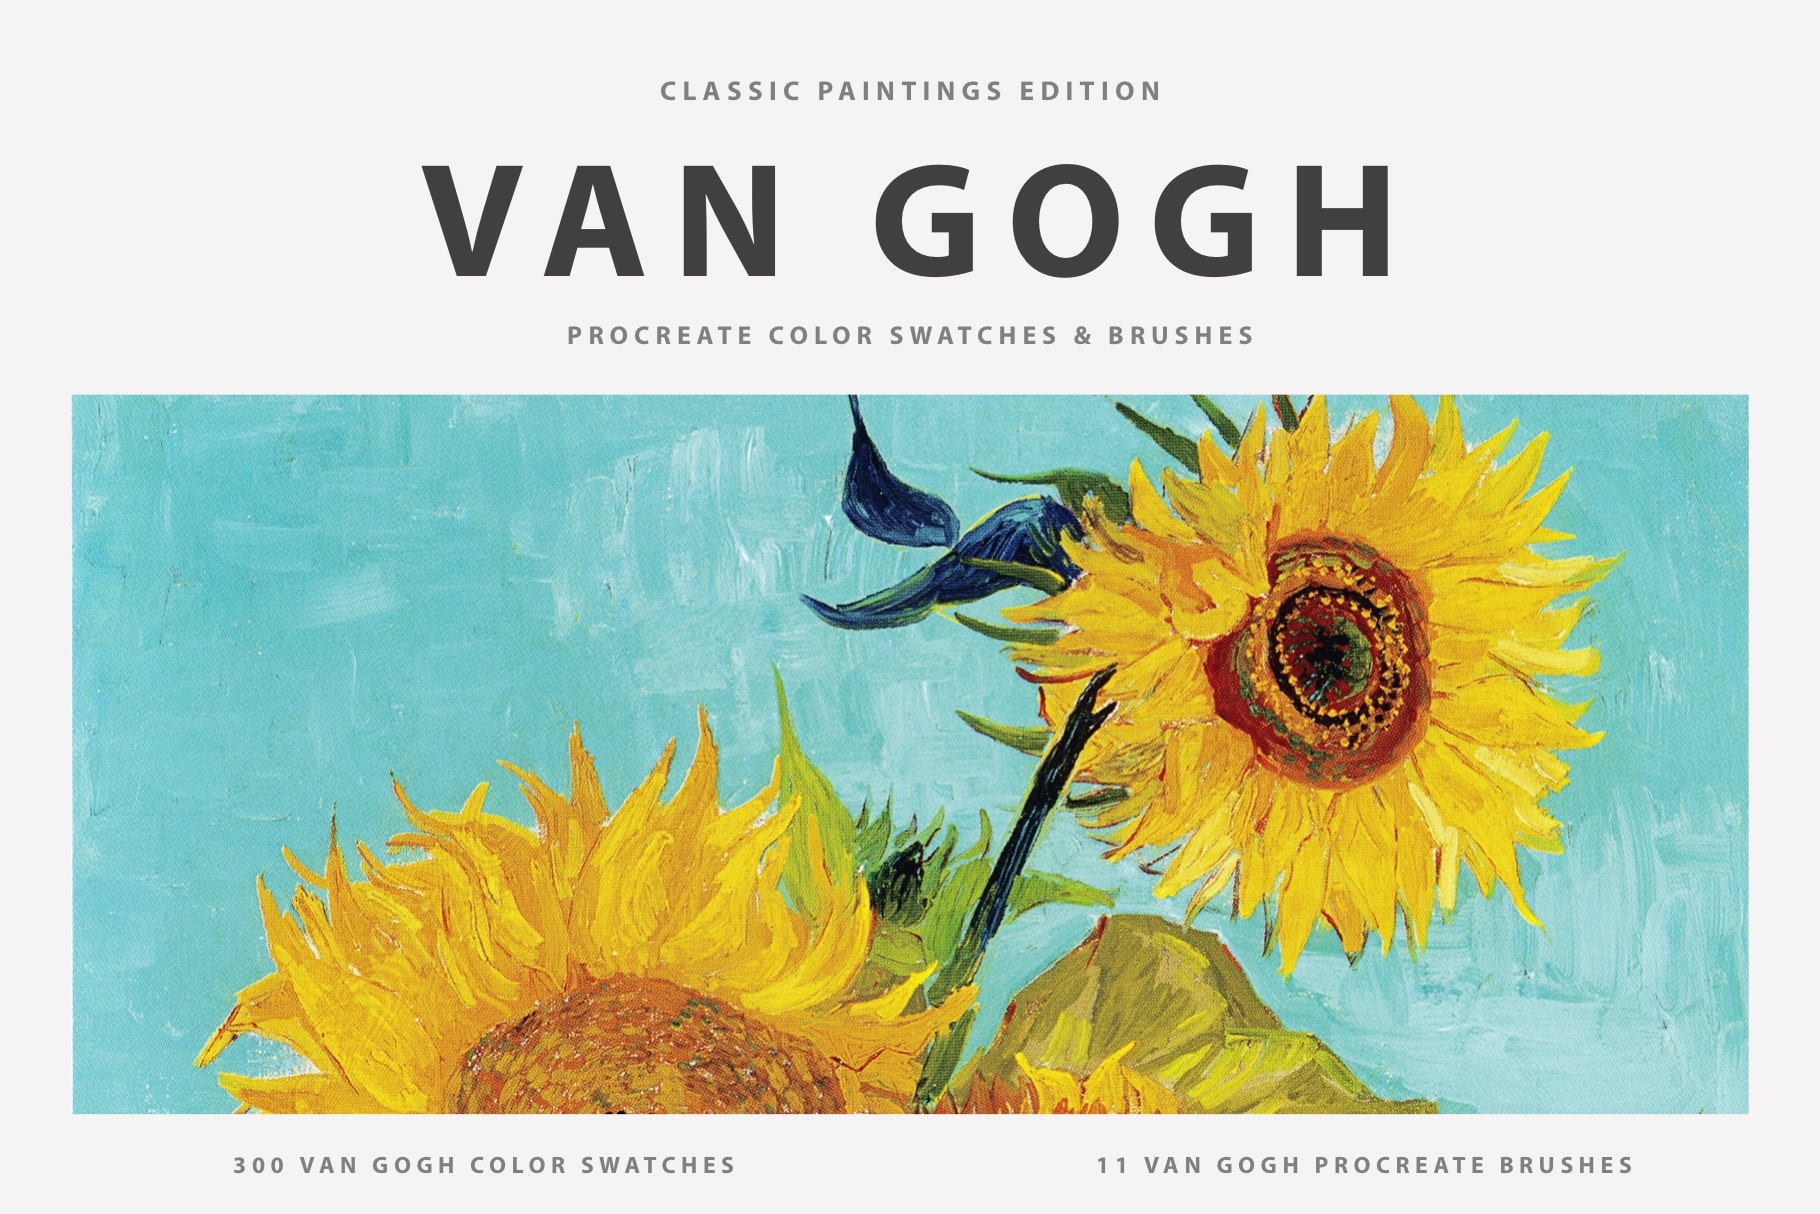 Van Gogh's Art Procreate Brushes